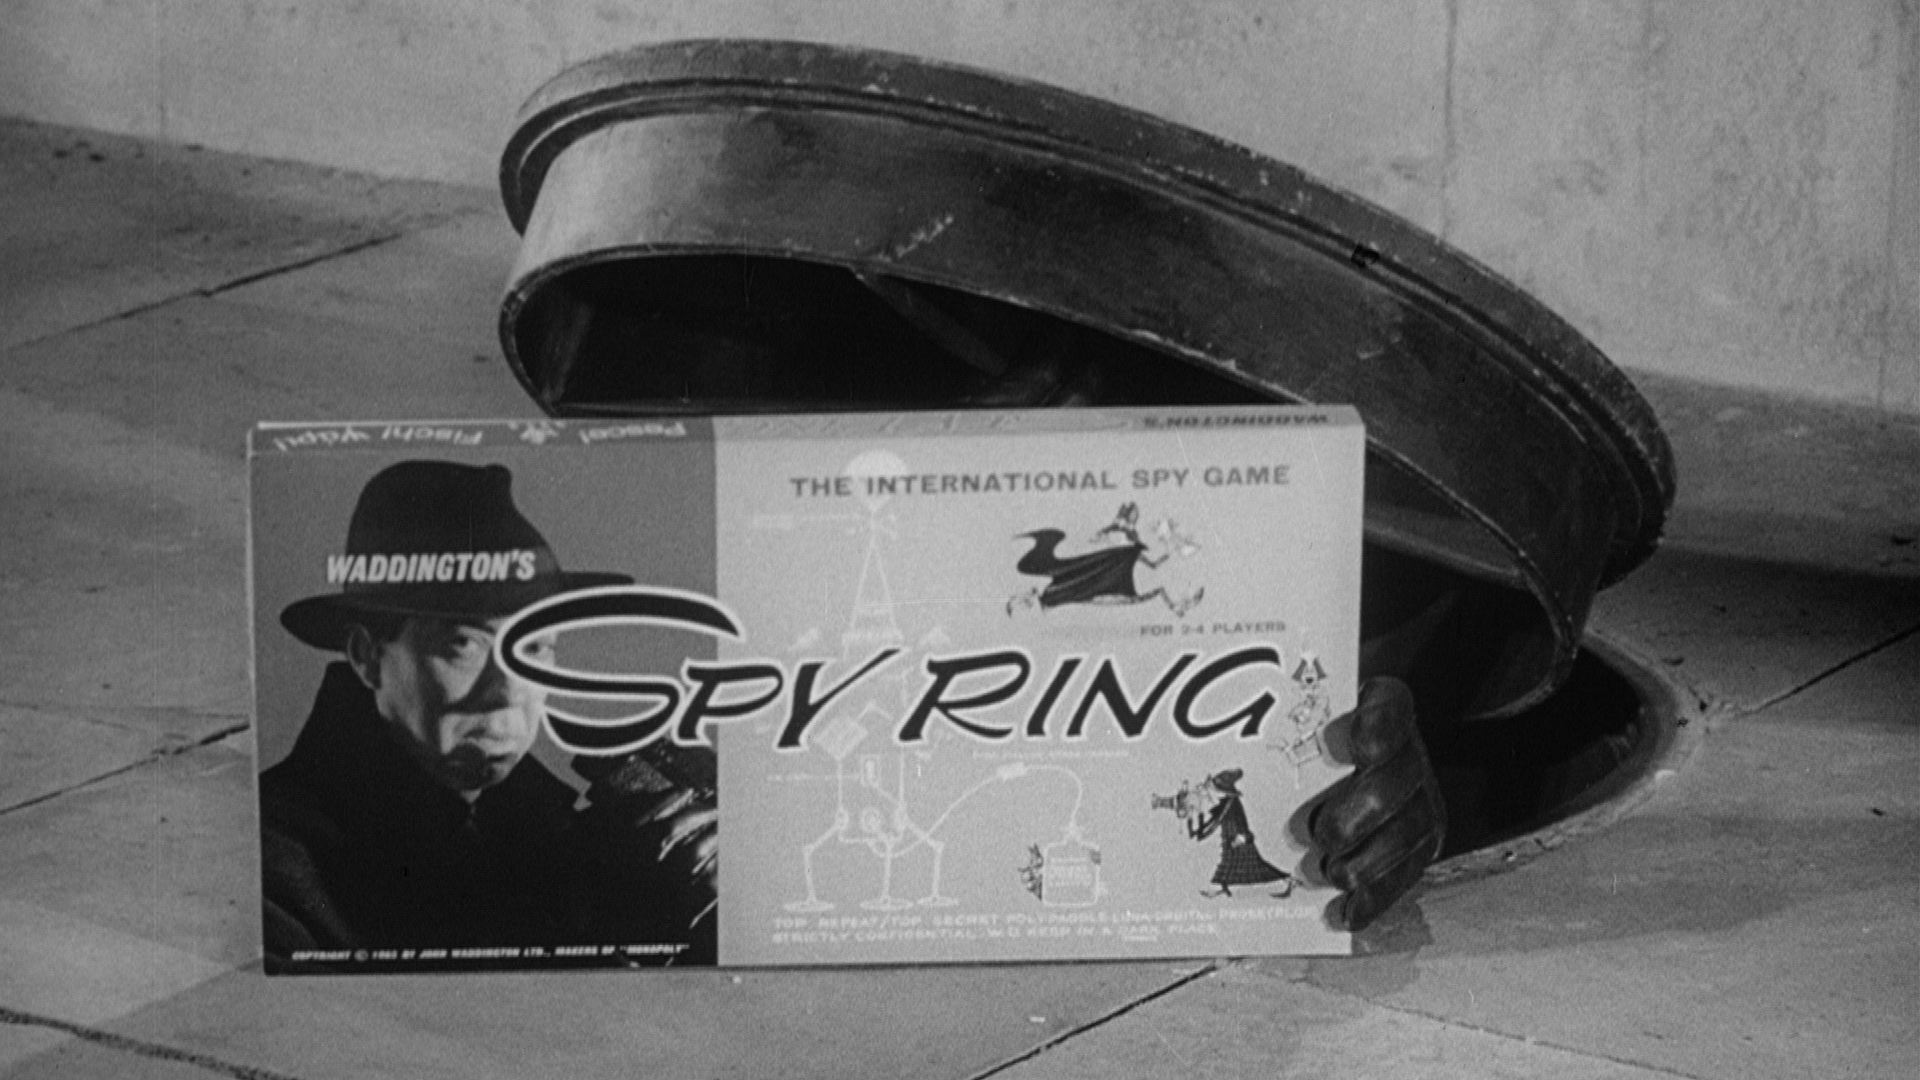 New York's Culper Spy Ring - South Street Seaport Museum